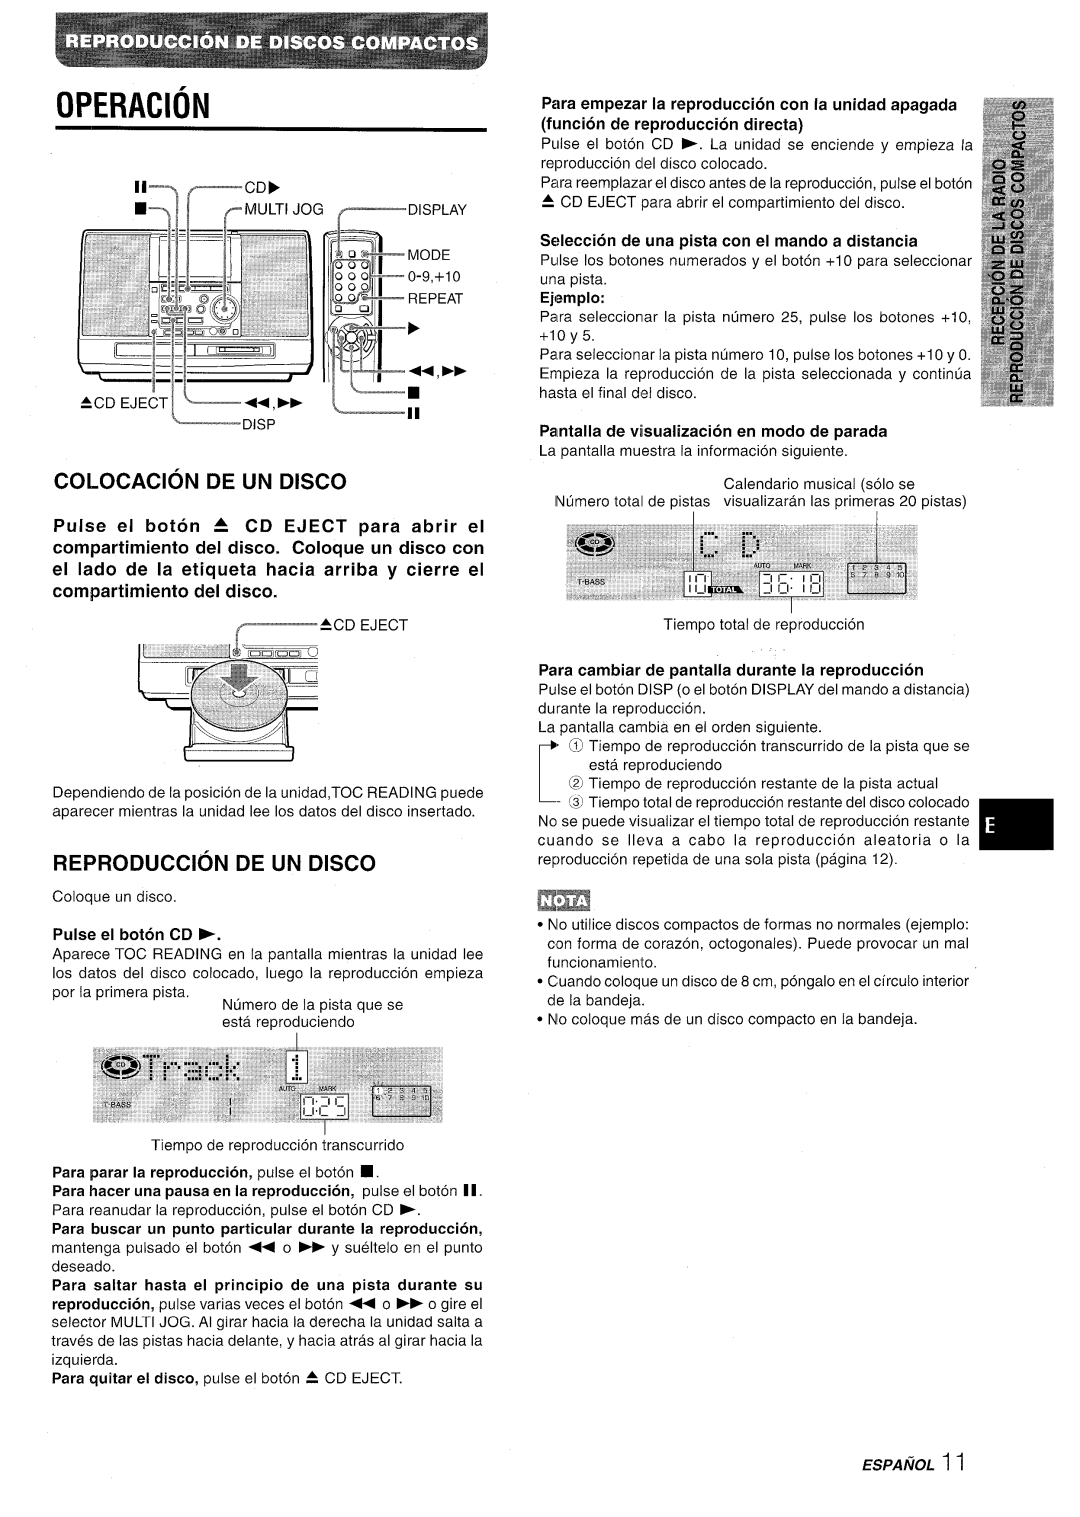 Aiwa CSD-MD50 manual Operacion, Colocacion De Un Disco, Reproduction De Un Disco, Pulse el boton CD E, Ejernplo, ESPAtiOL 